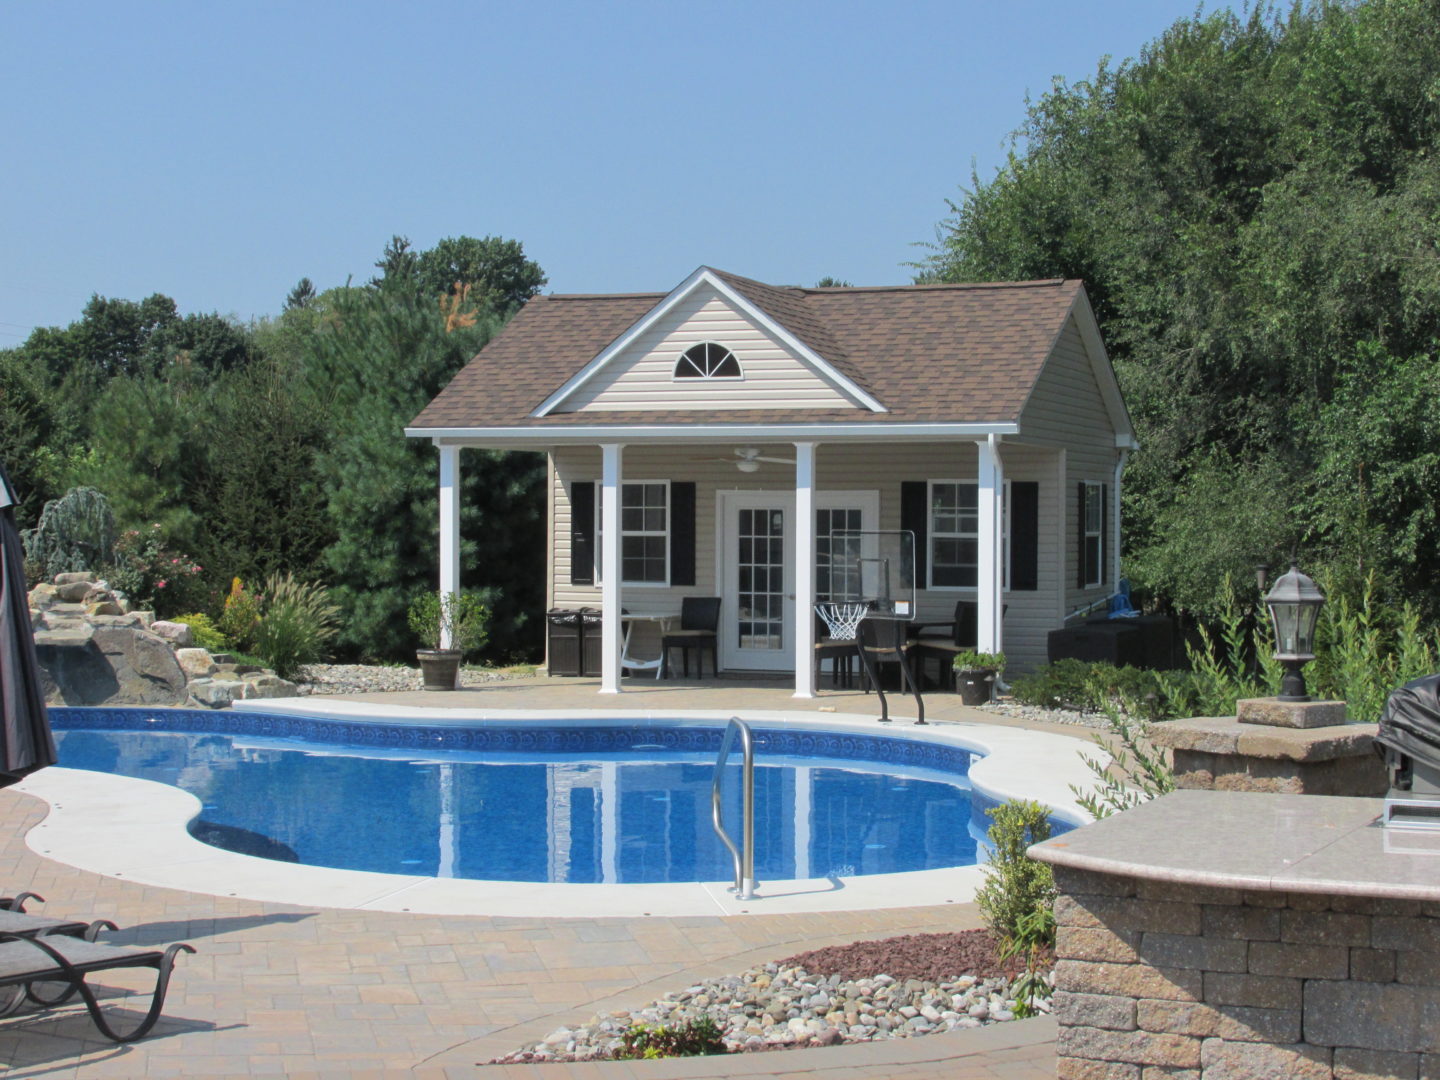 Gable pool house design